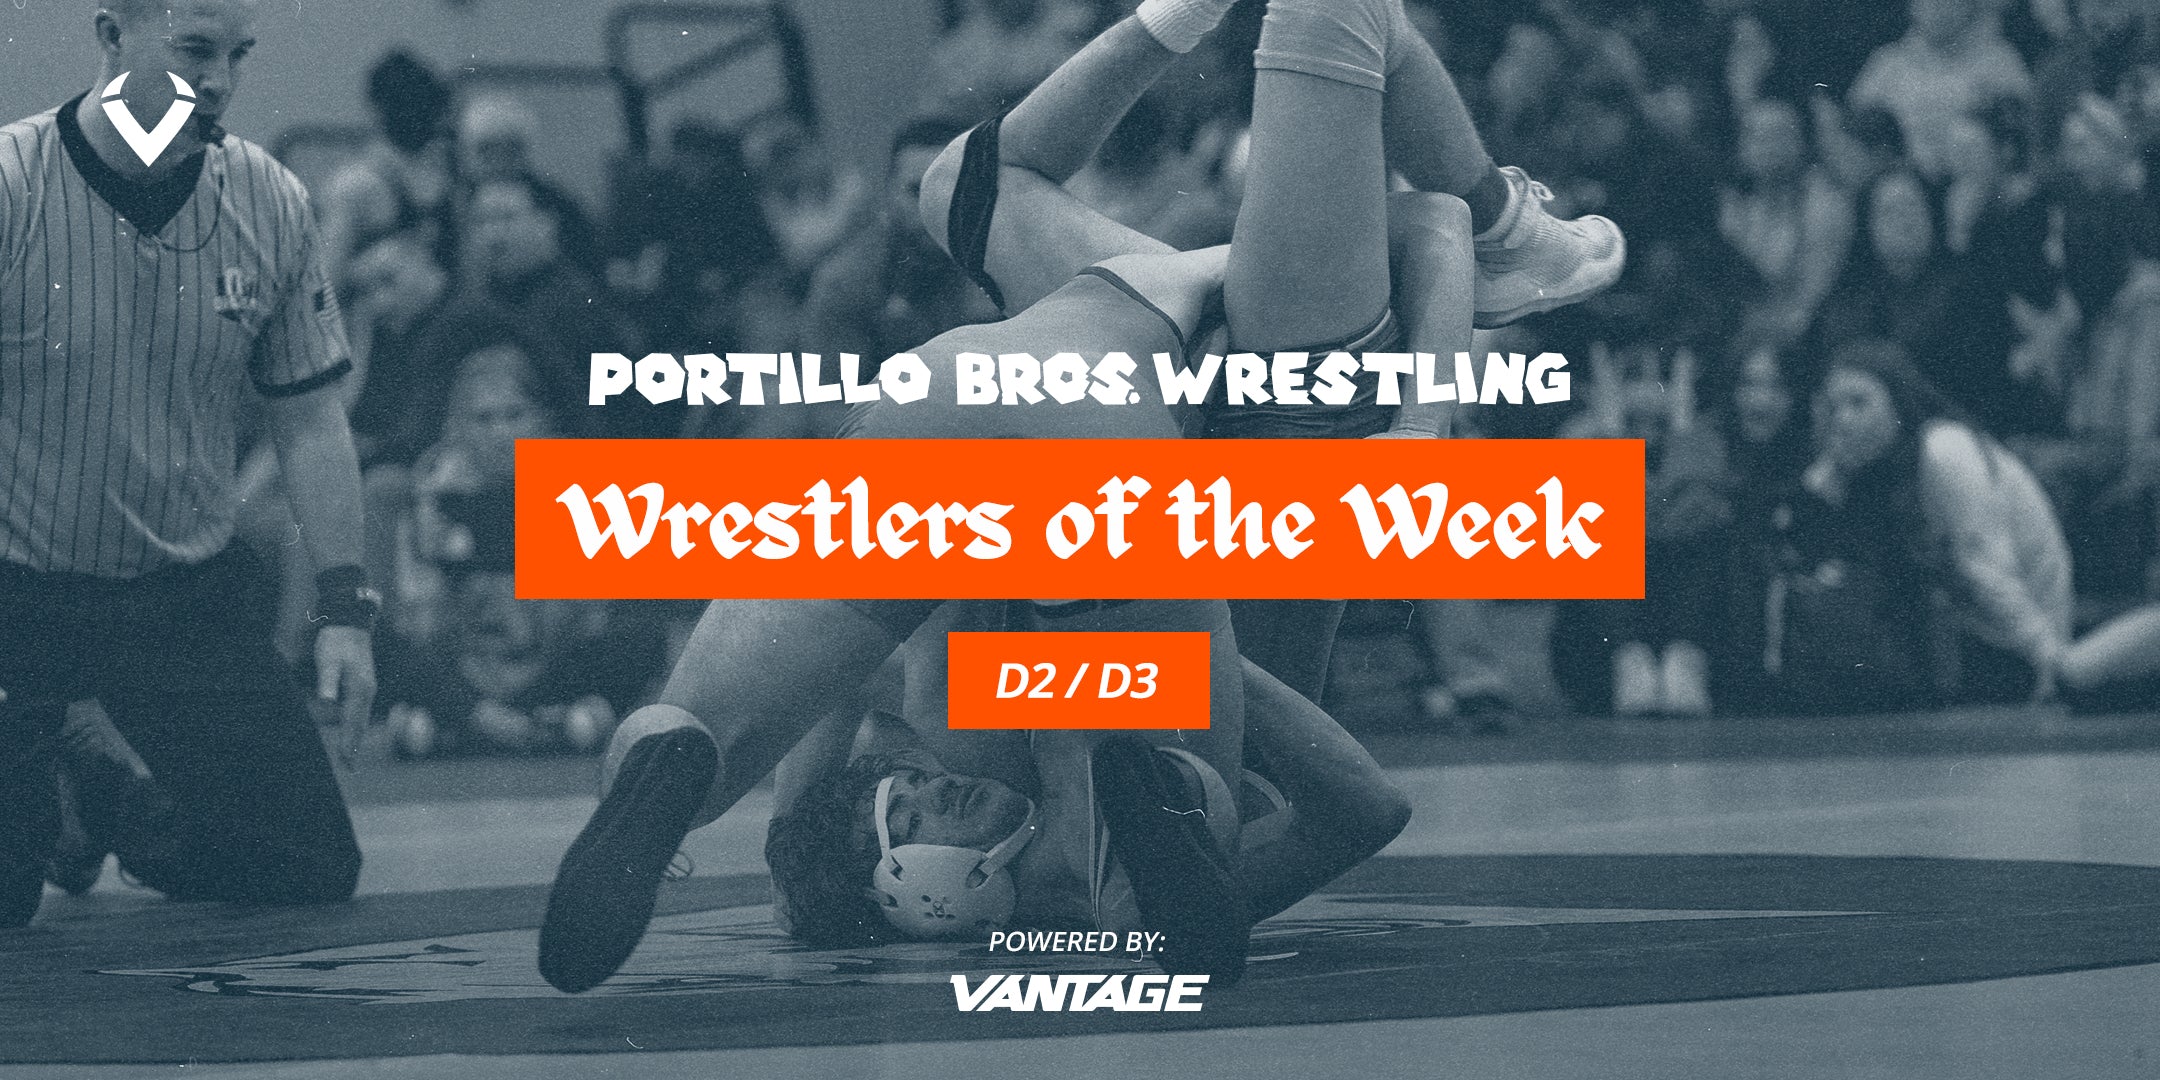 Portillo Bros Wrestling - Wrestlers of the Week (D2/D3)